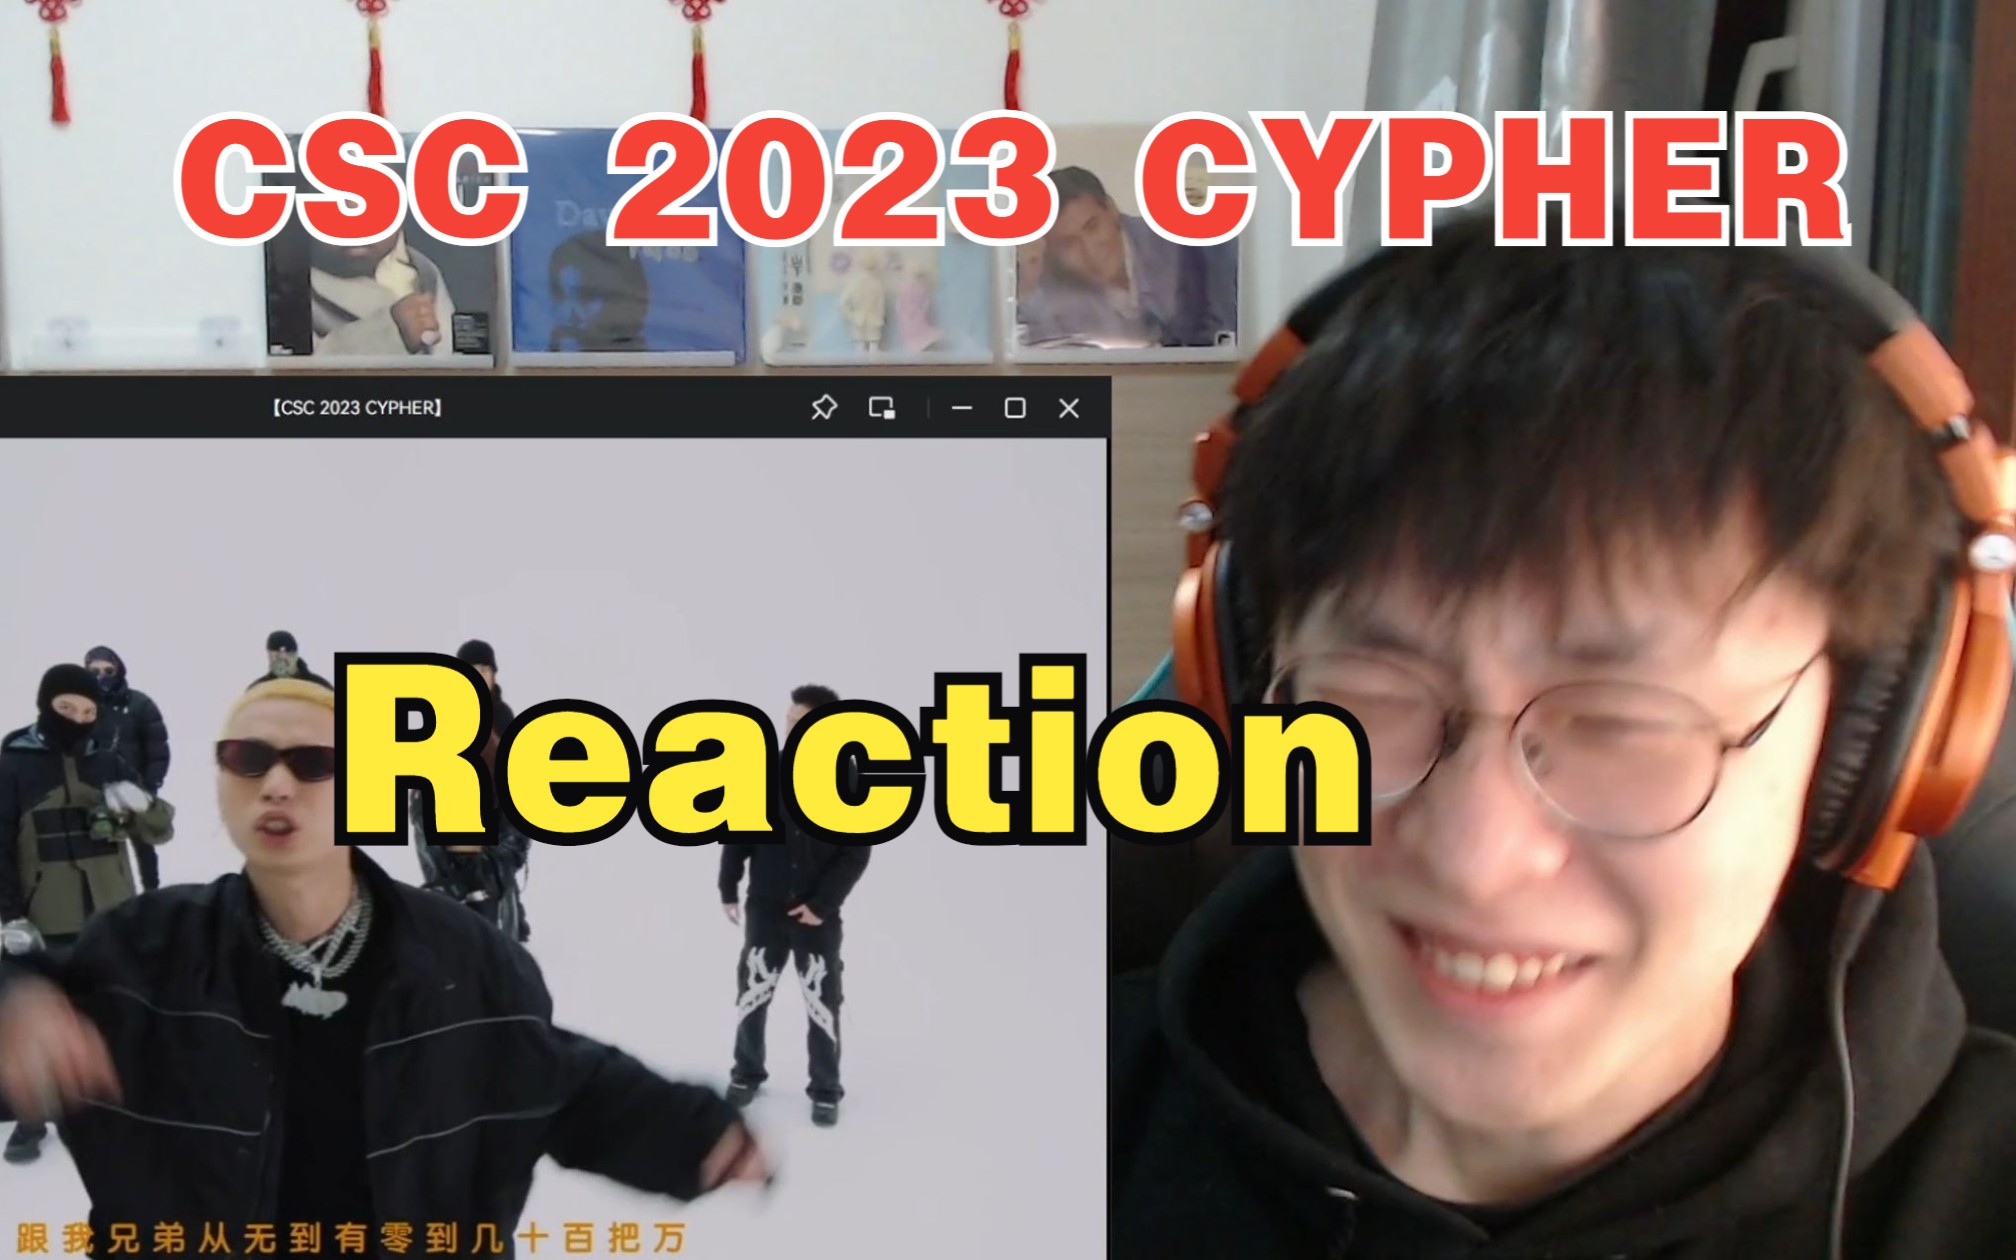 CSC 2023 CYPHER质量可谓上乘 盛宇老师又把mvp拿了属于是【说唱Reaction】